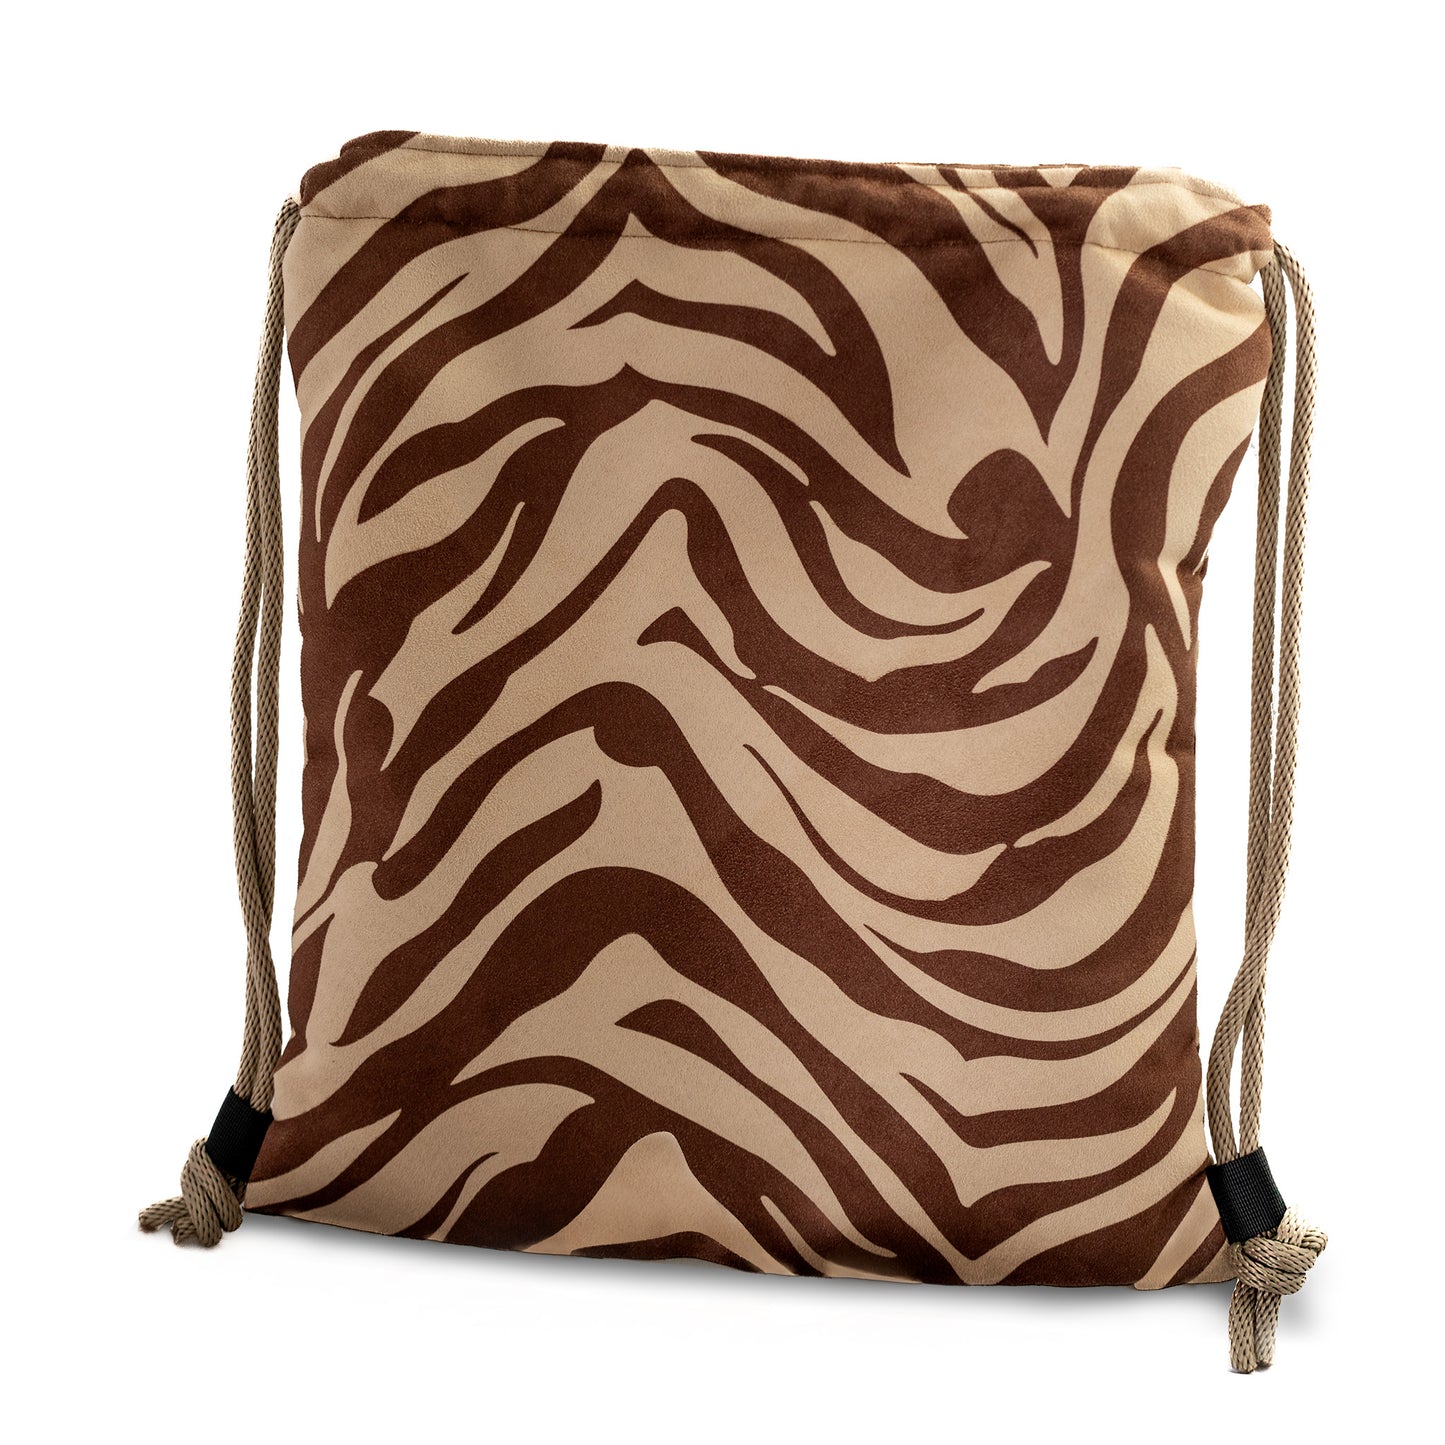 Brown & Tan Zebra Drawstring Cinch Backpack - Niclordesigns 